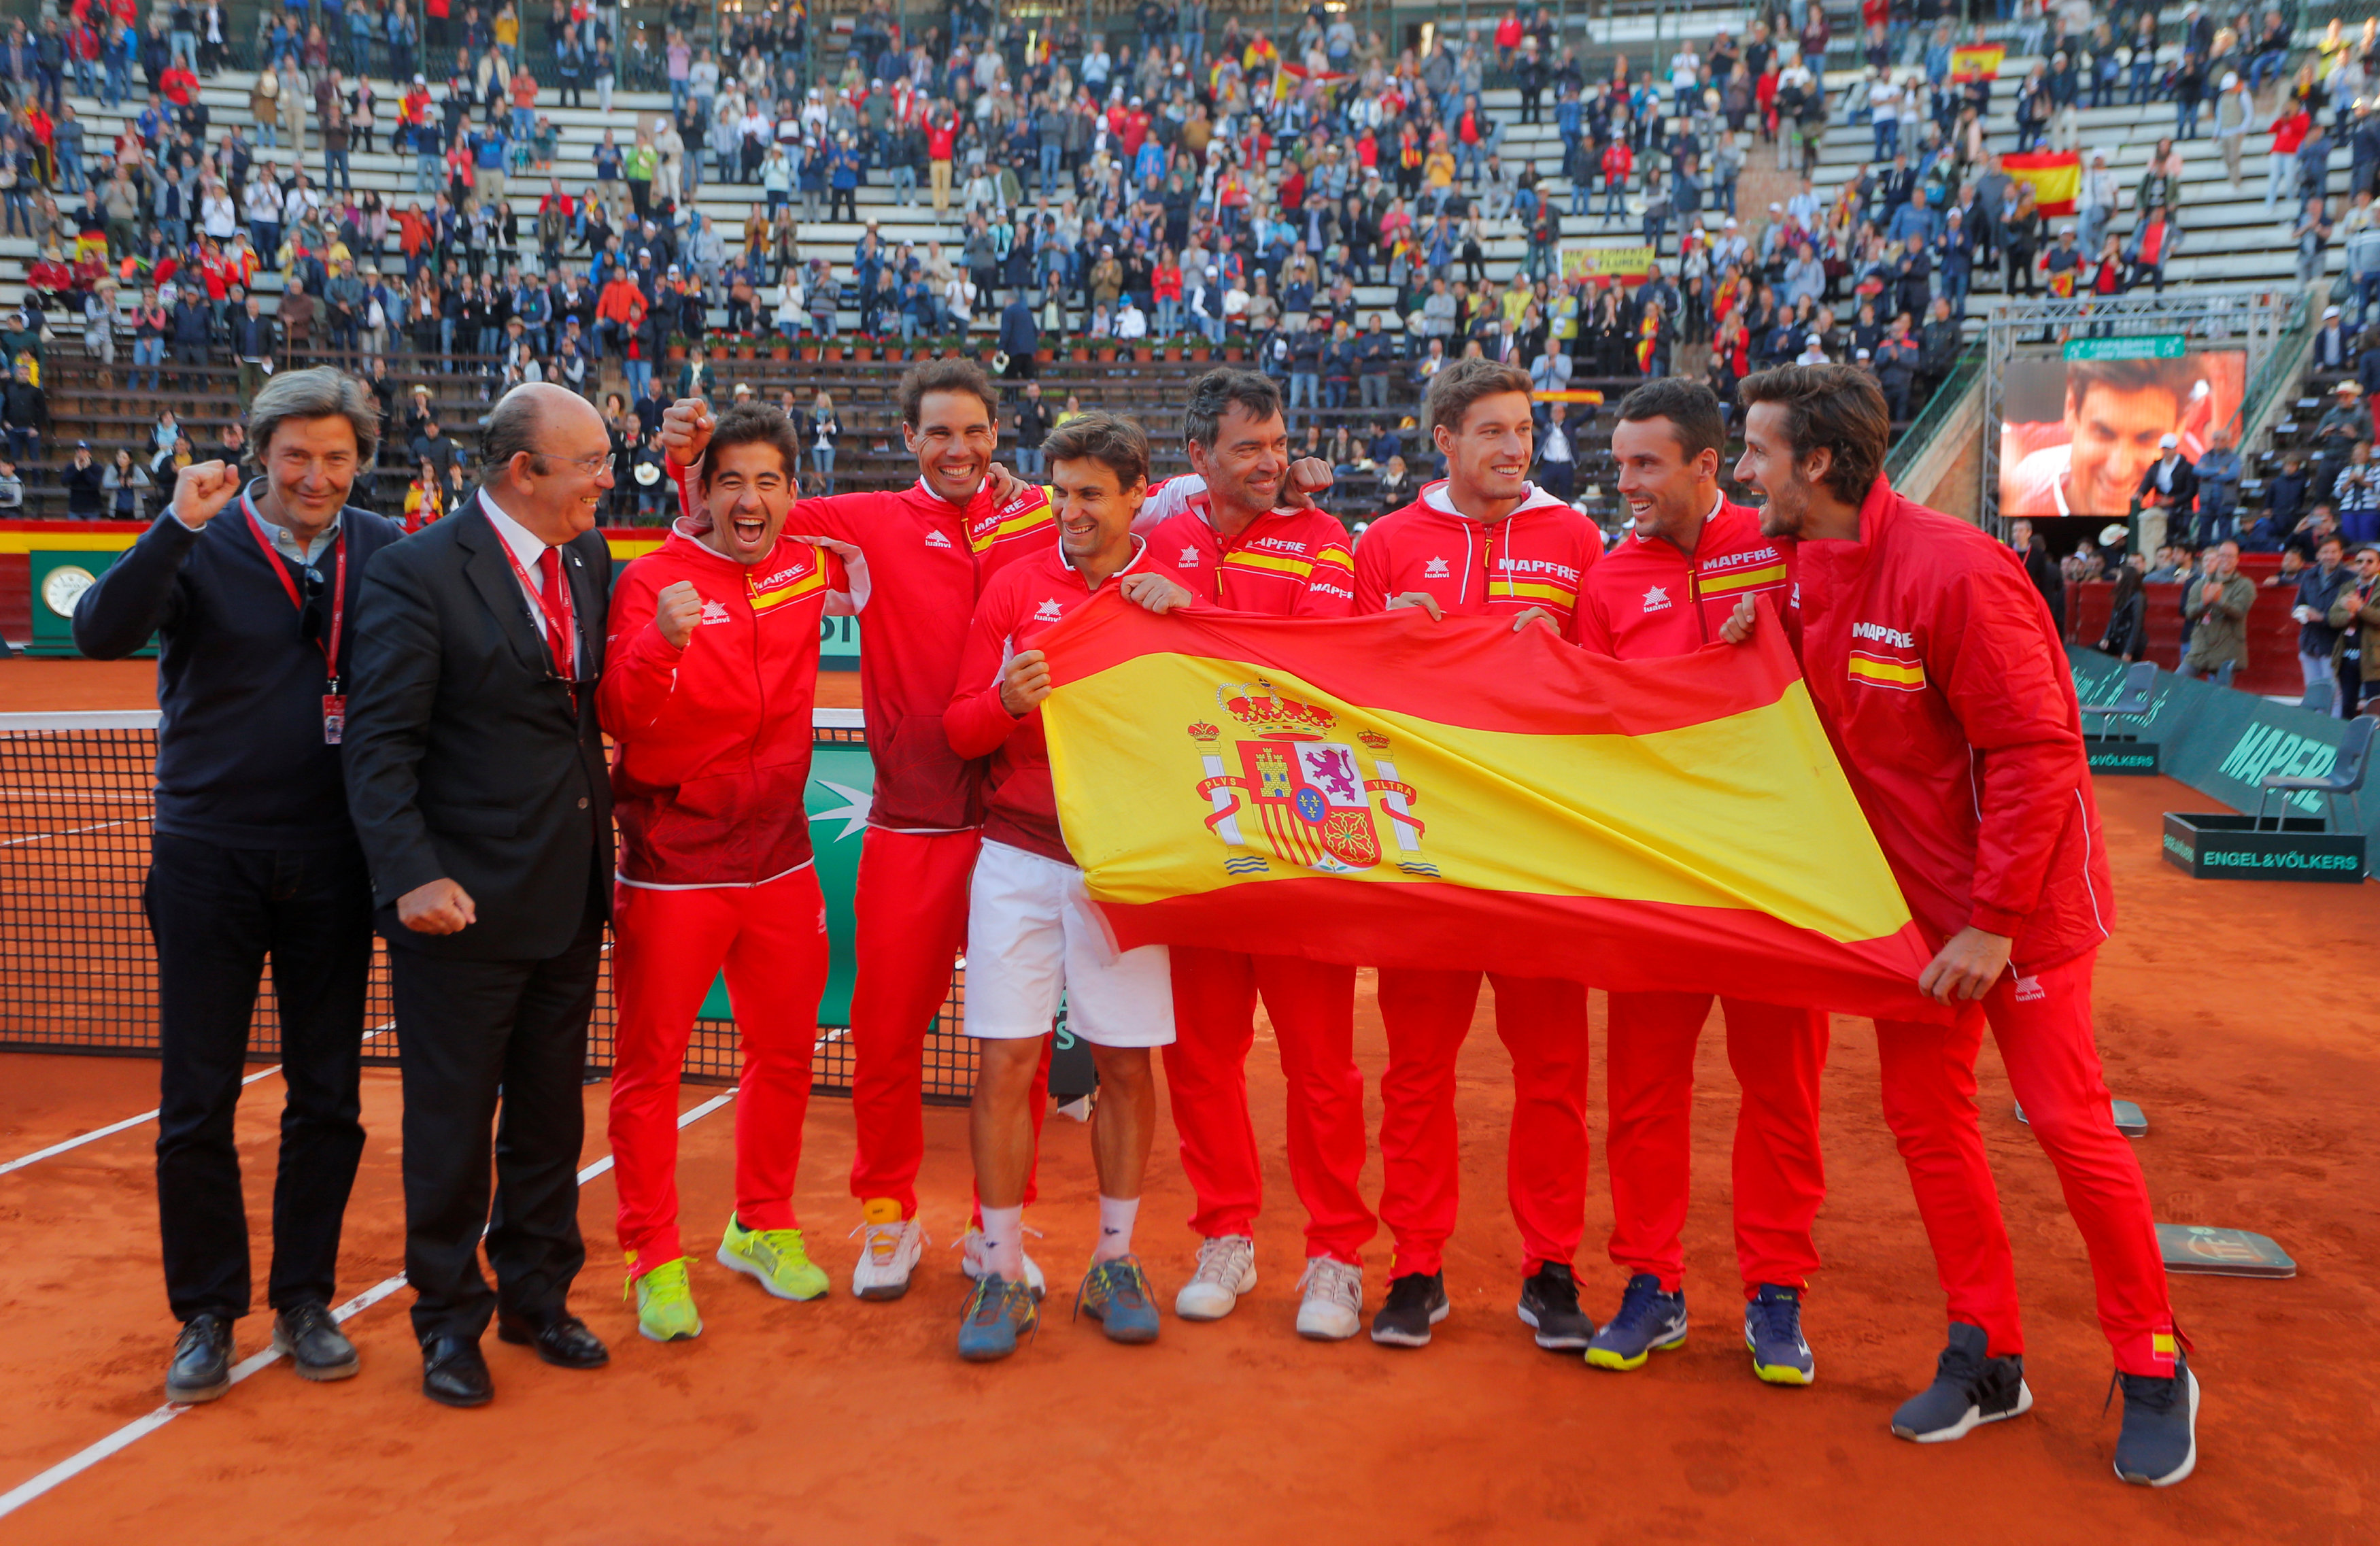 Tennis: Spain join France, Croatia in Davis Cup semis